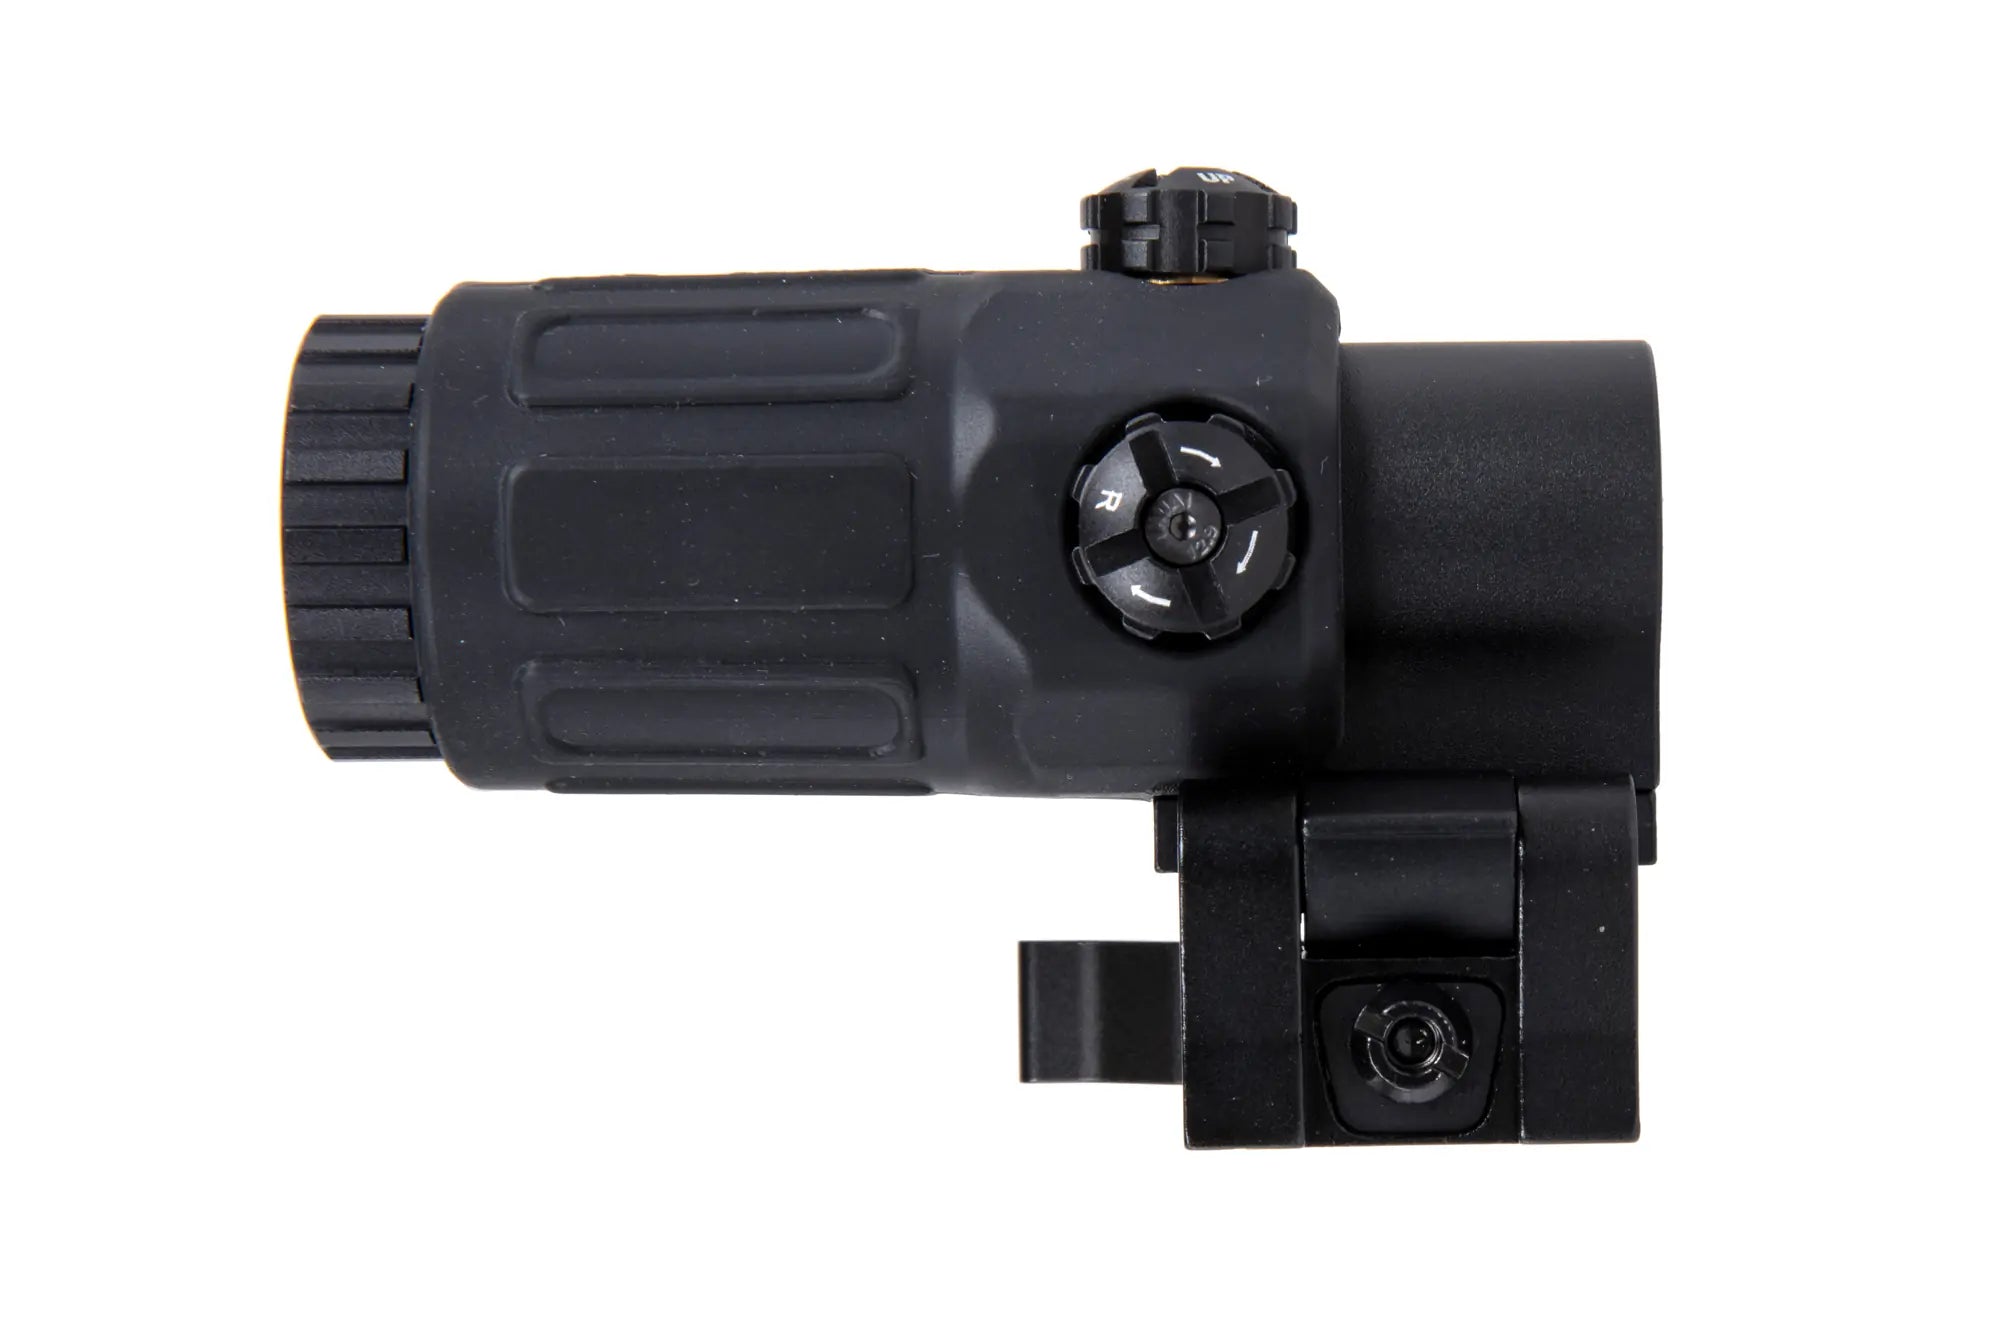 Magnifier replica scope type G33 Black-2